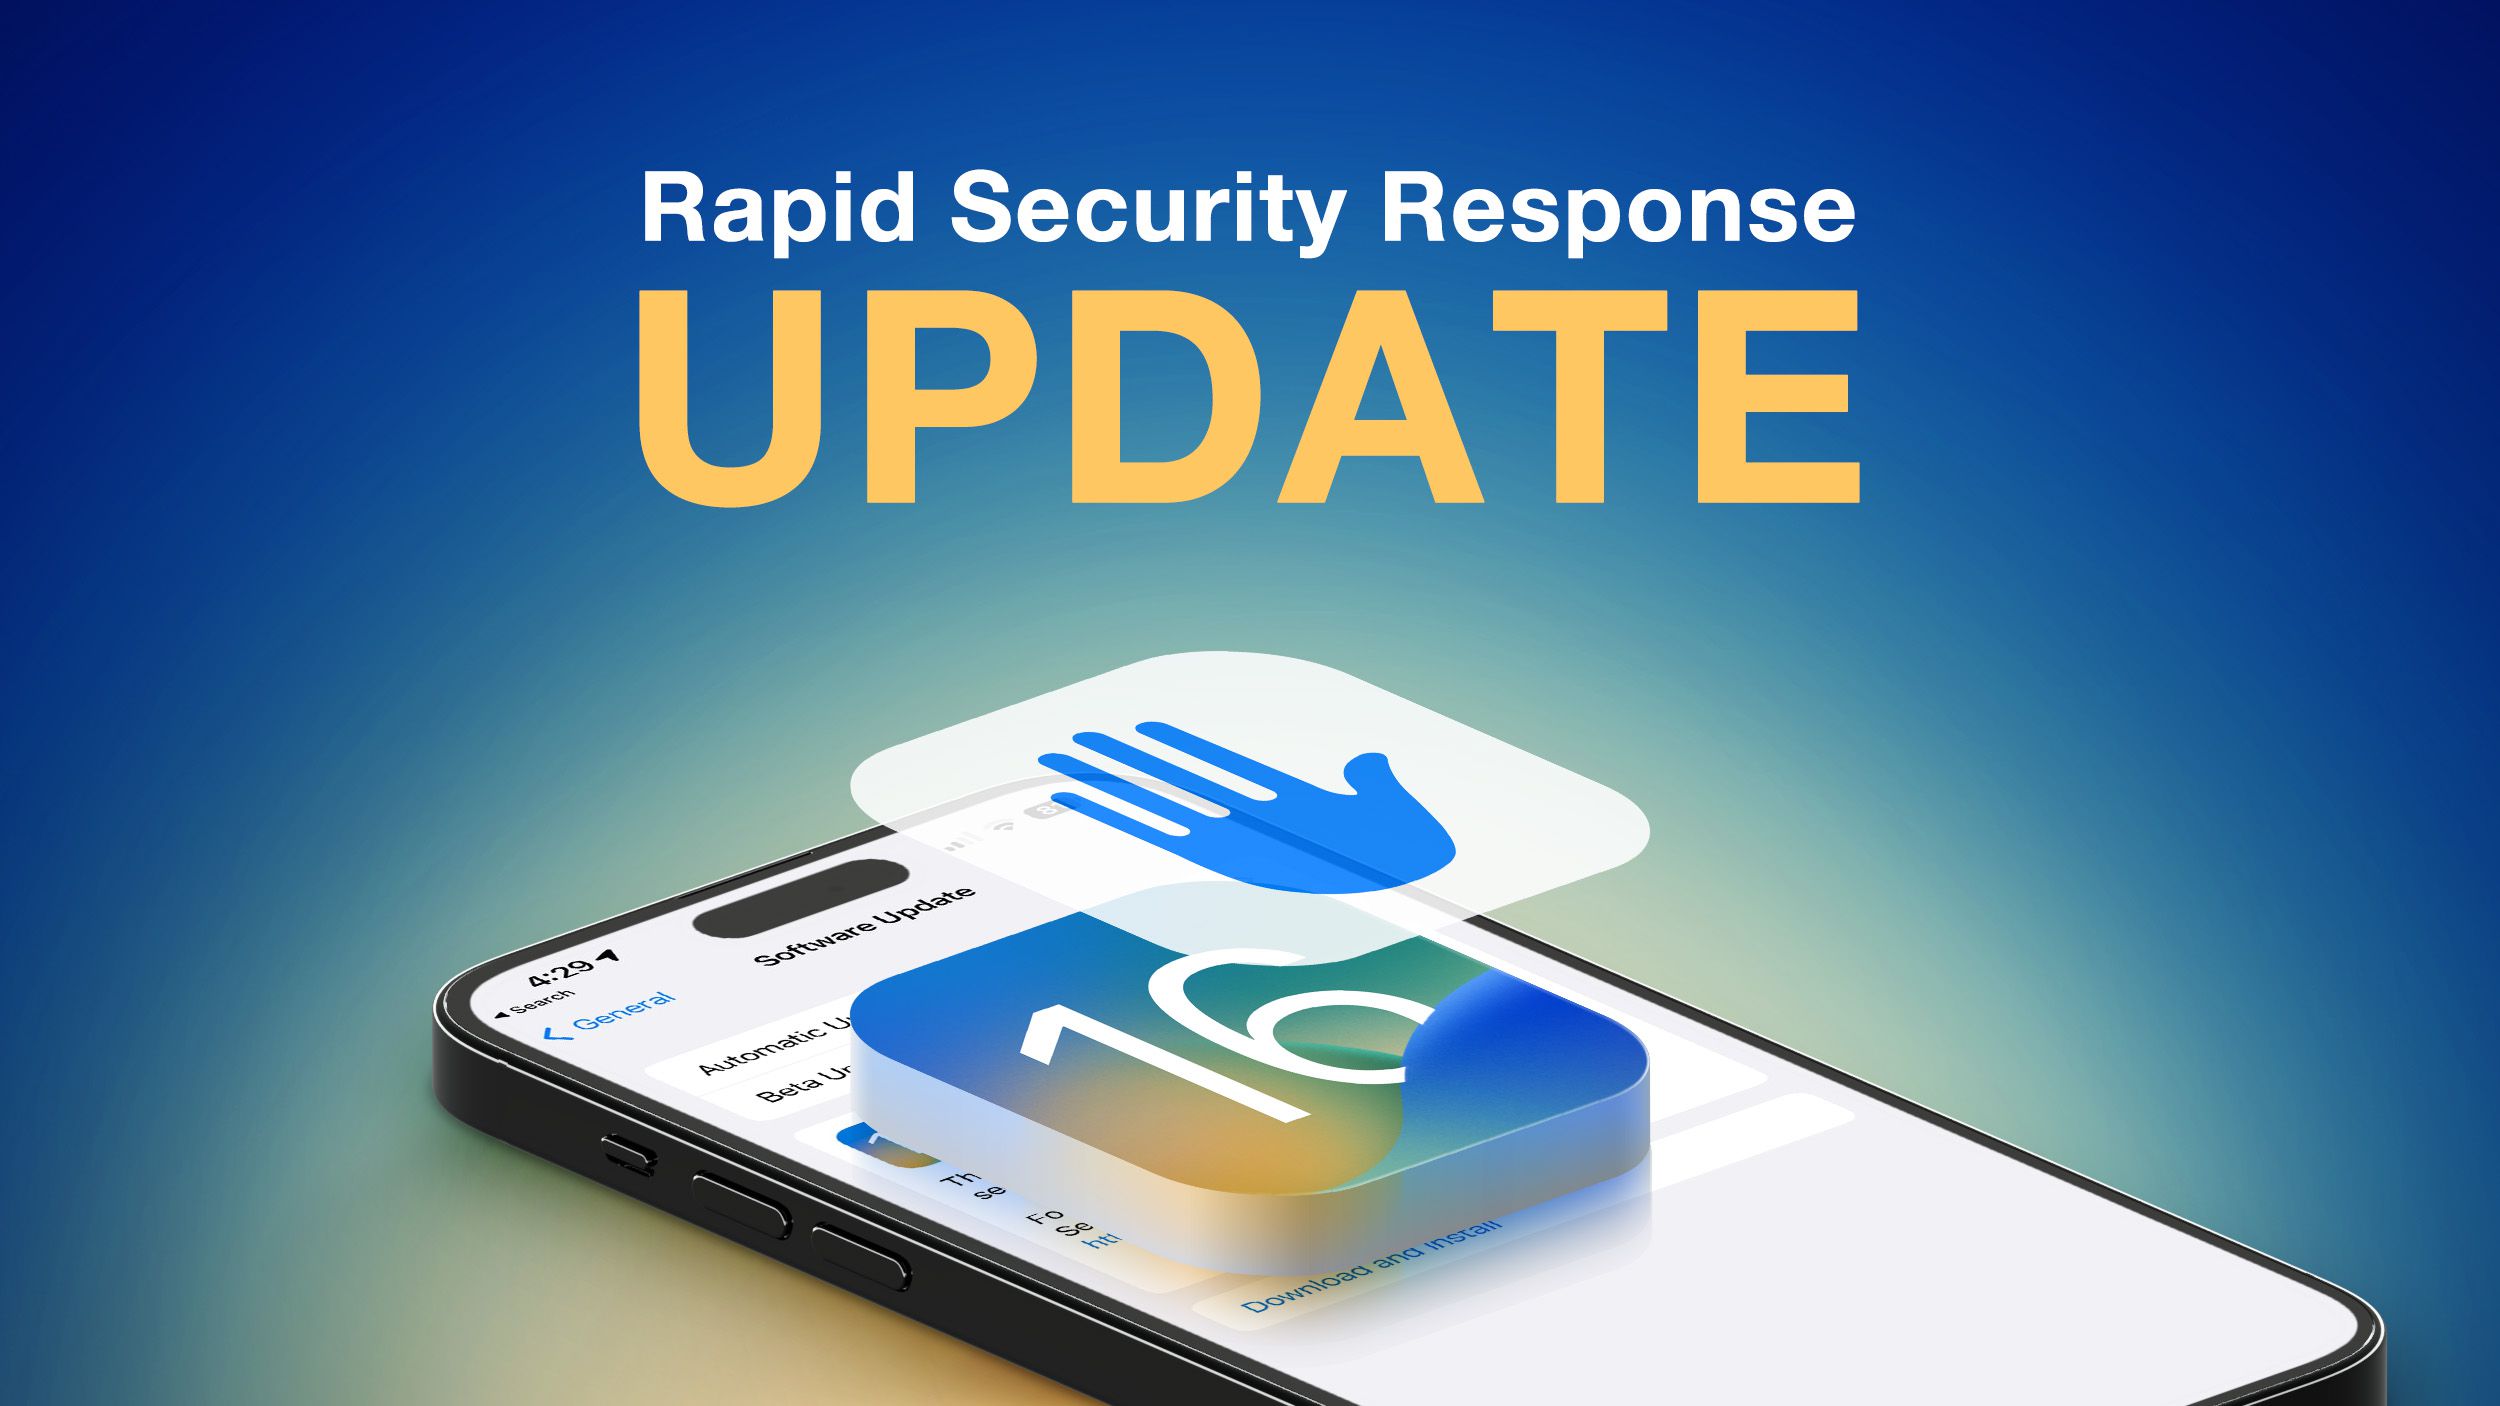 Apple's Critical Security Updates: iOS Fixes & Safari Bug